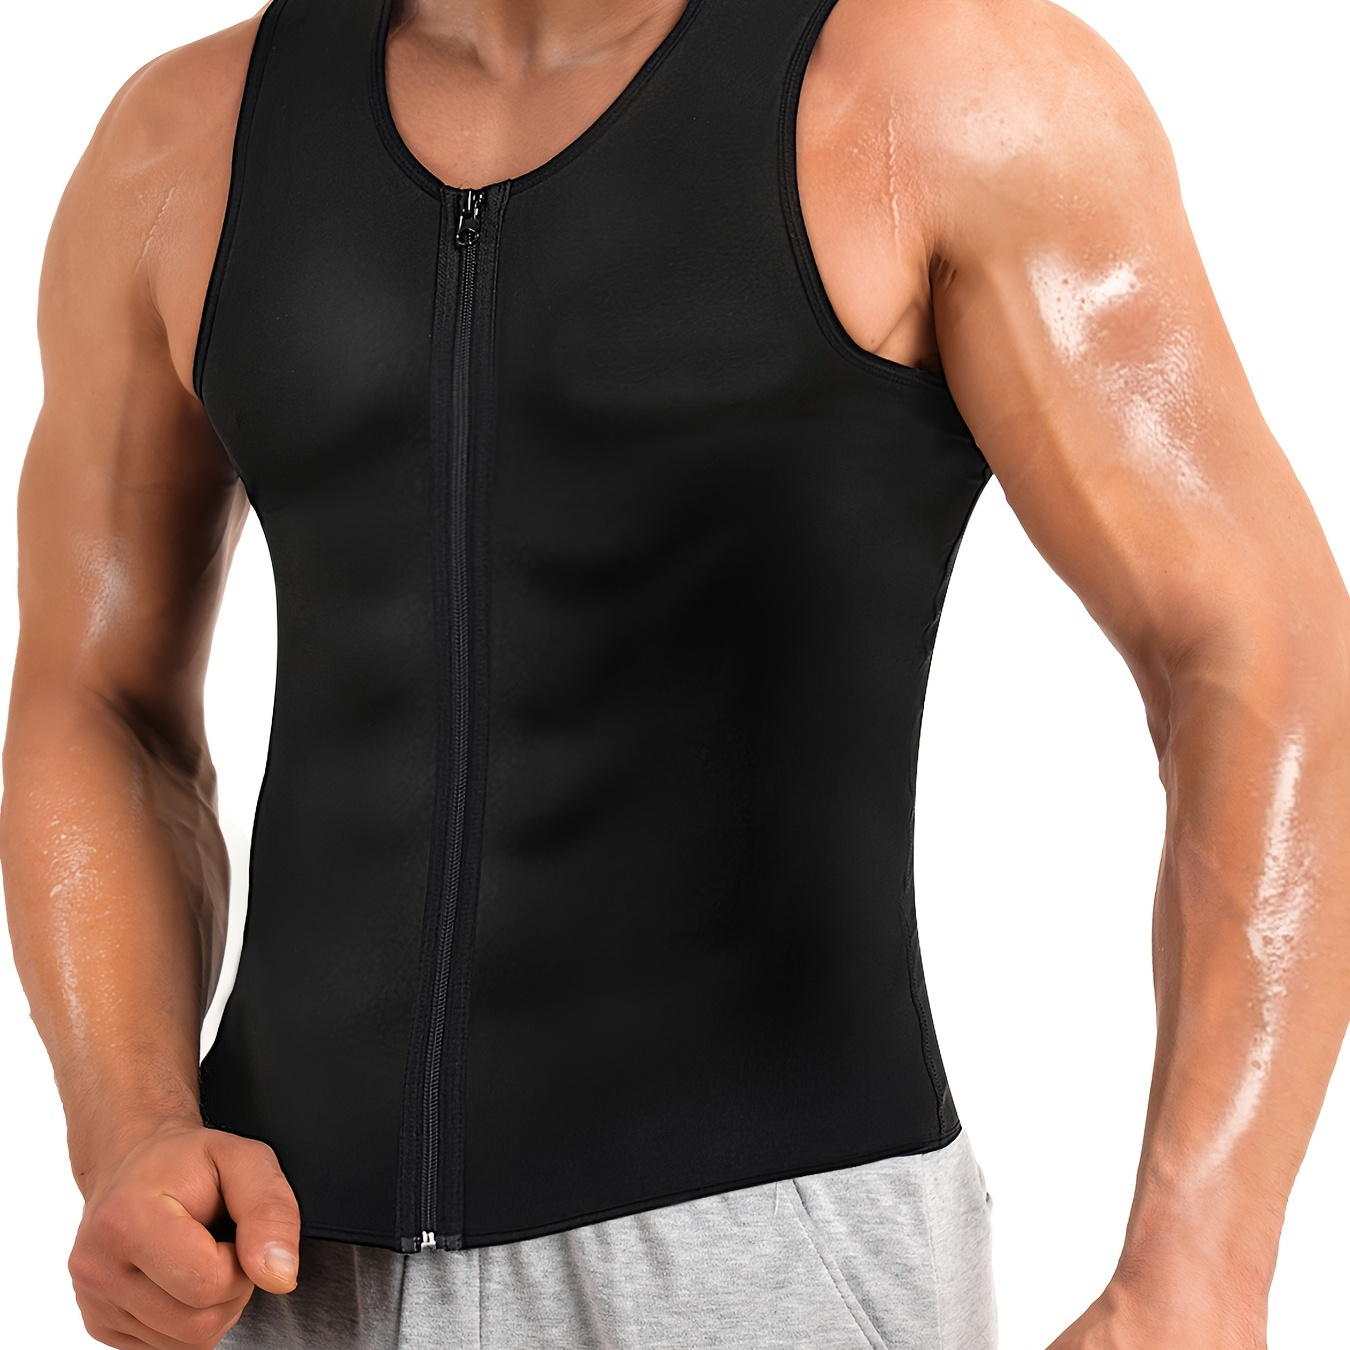 Neoprene Sauna Suit Tank Top for Men Workout Shaper Vest Gym Shirt Weight  Loss